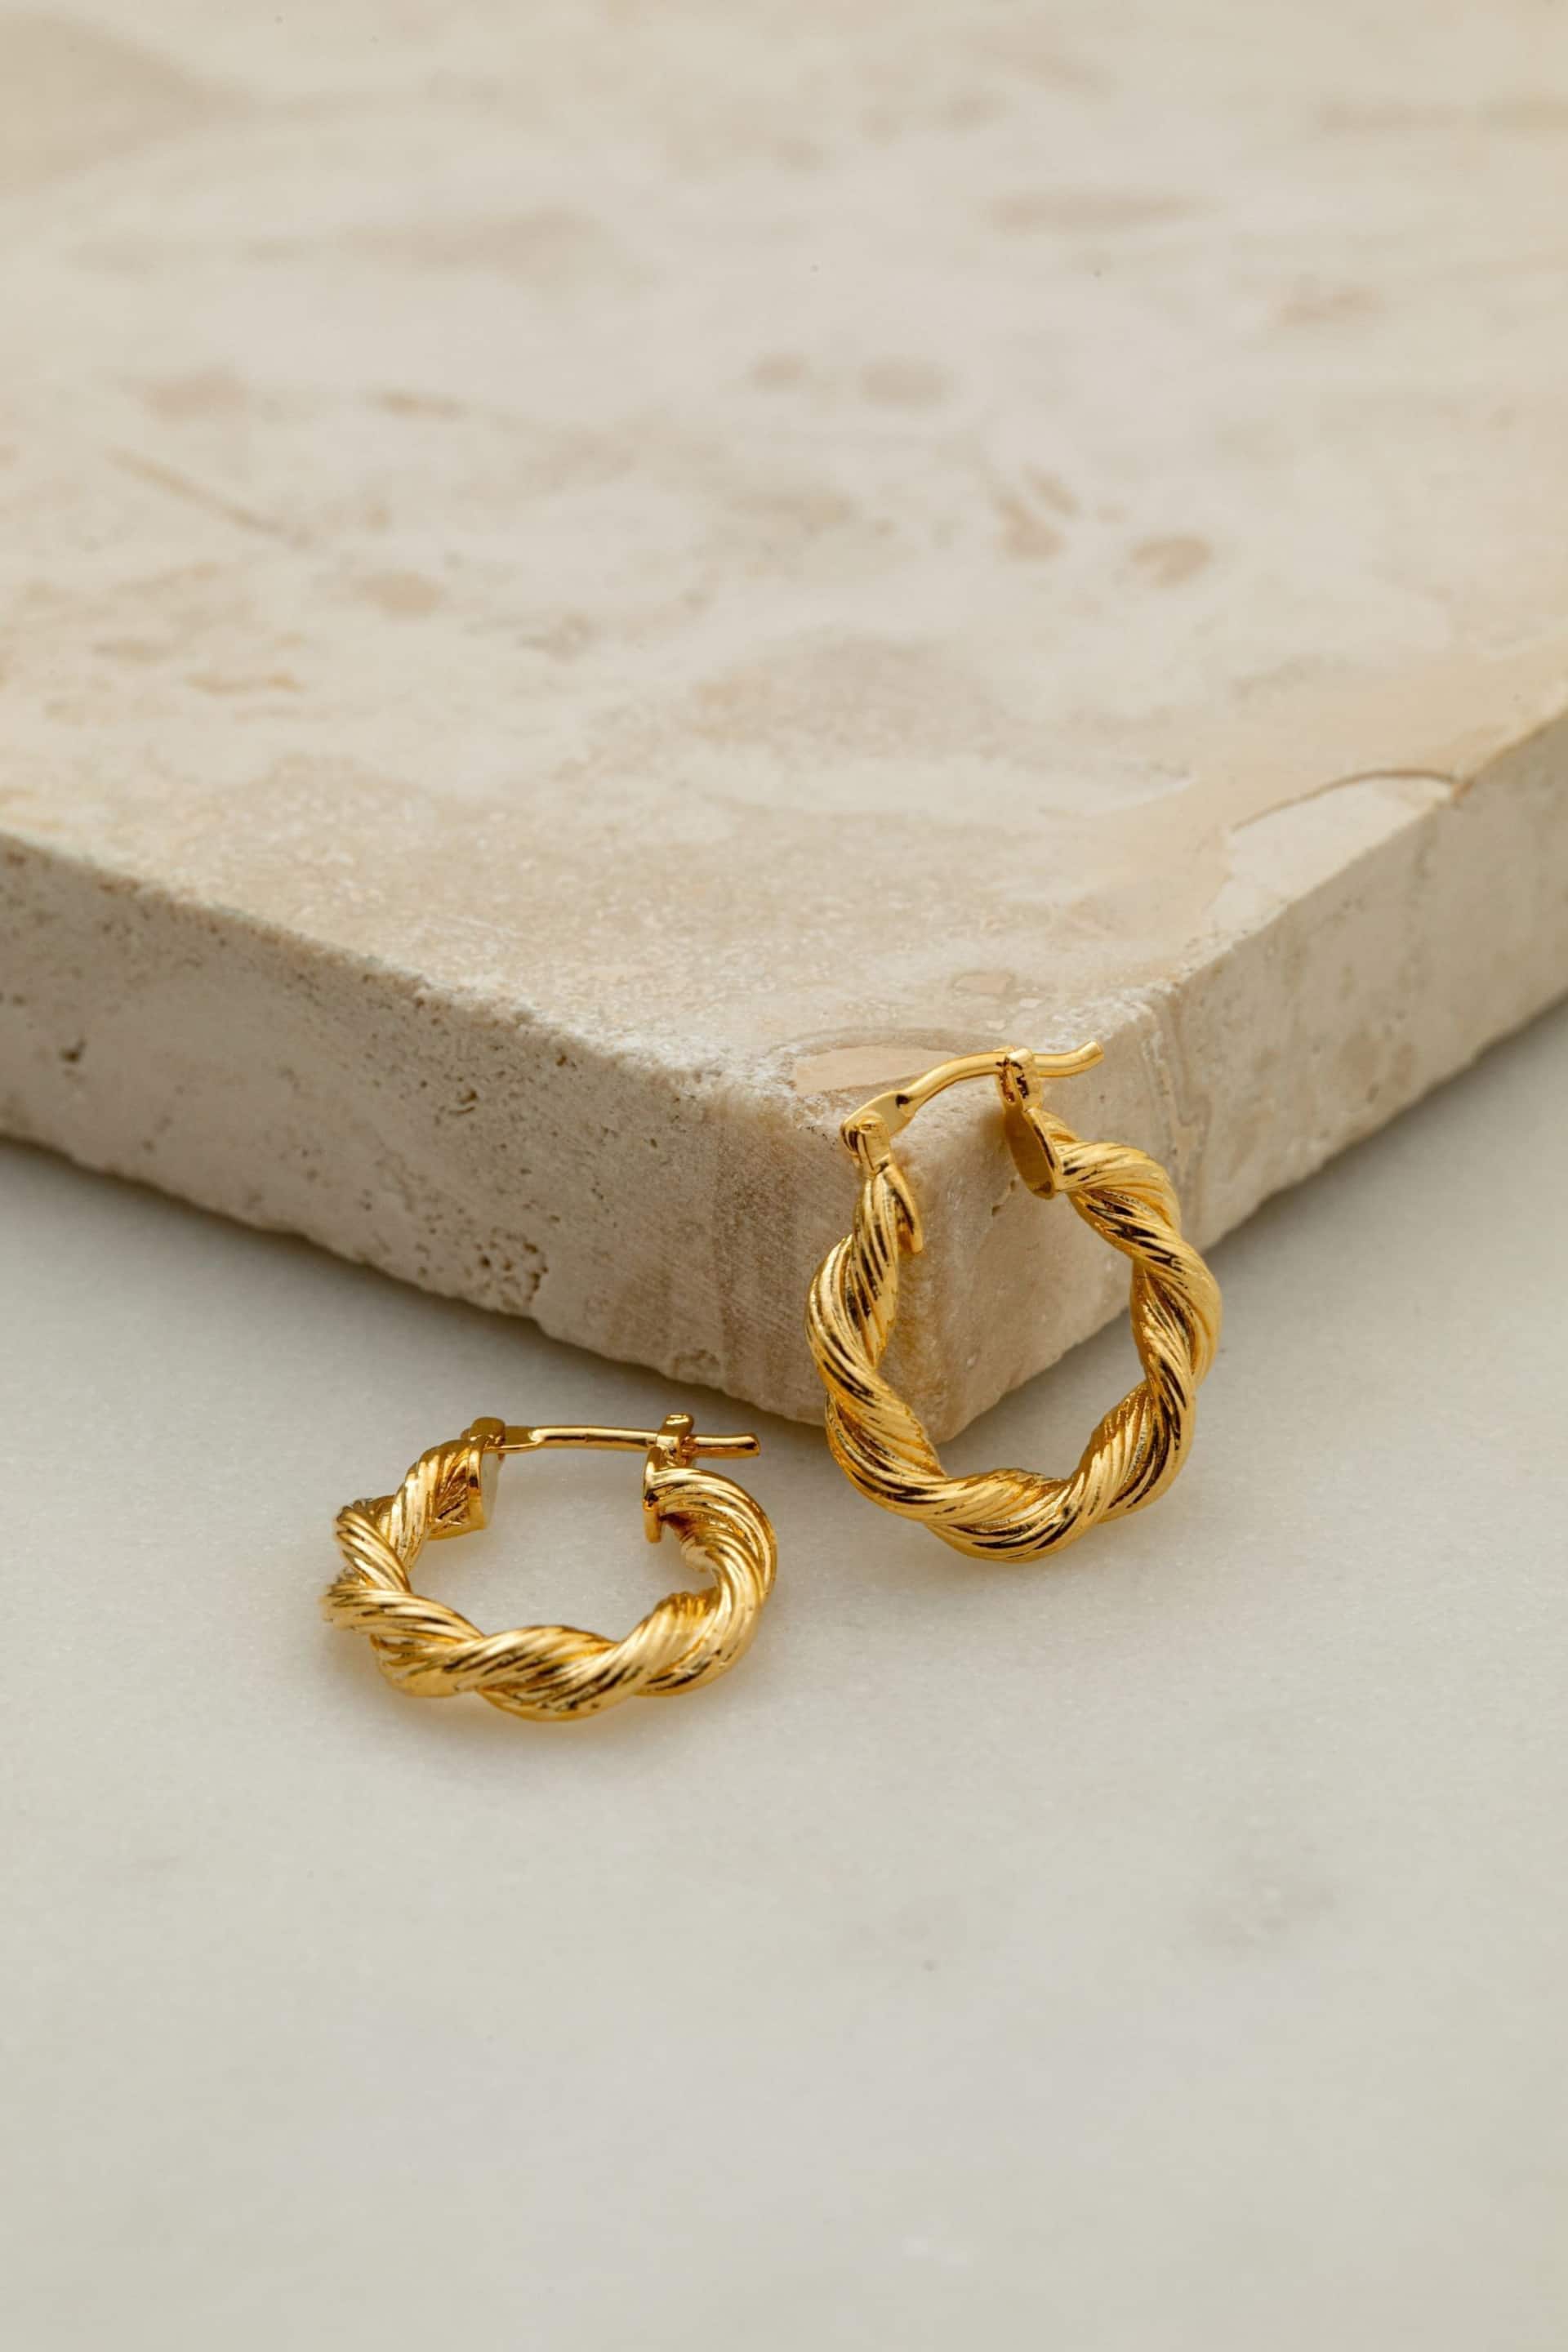 Orelia London Small 18k Gold Plating Twist Textured Hoops Earrings - Image 1 of 2